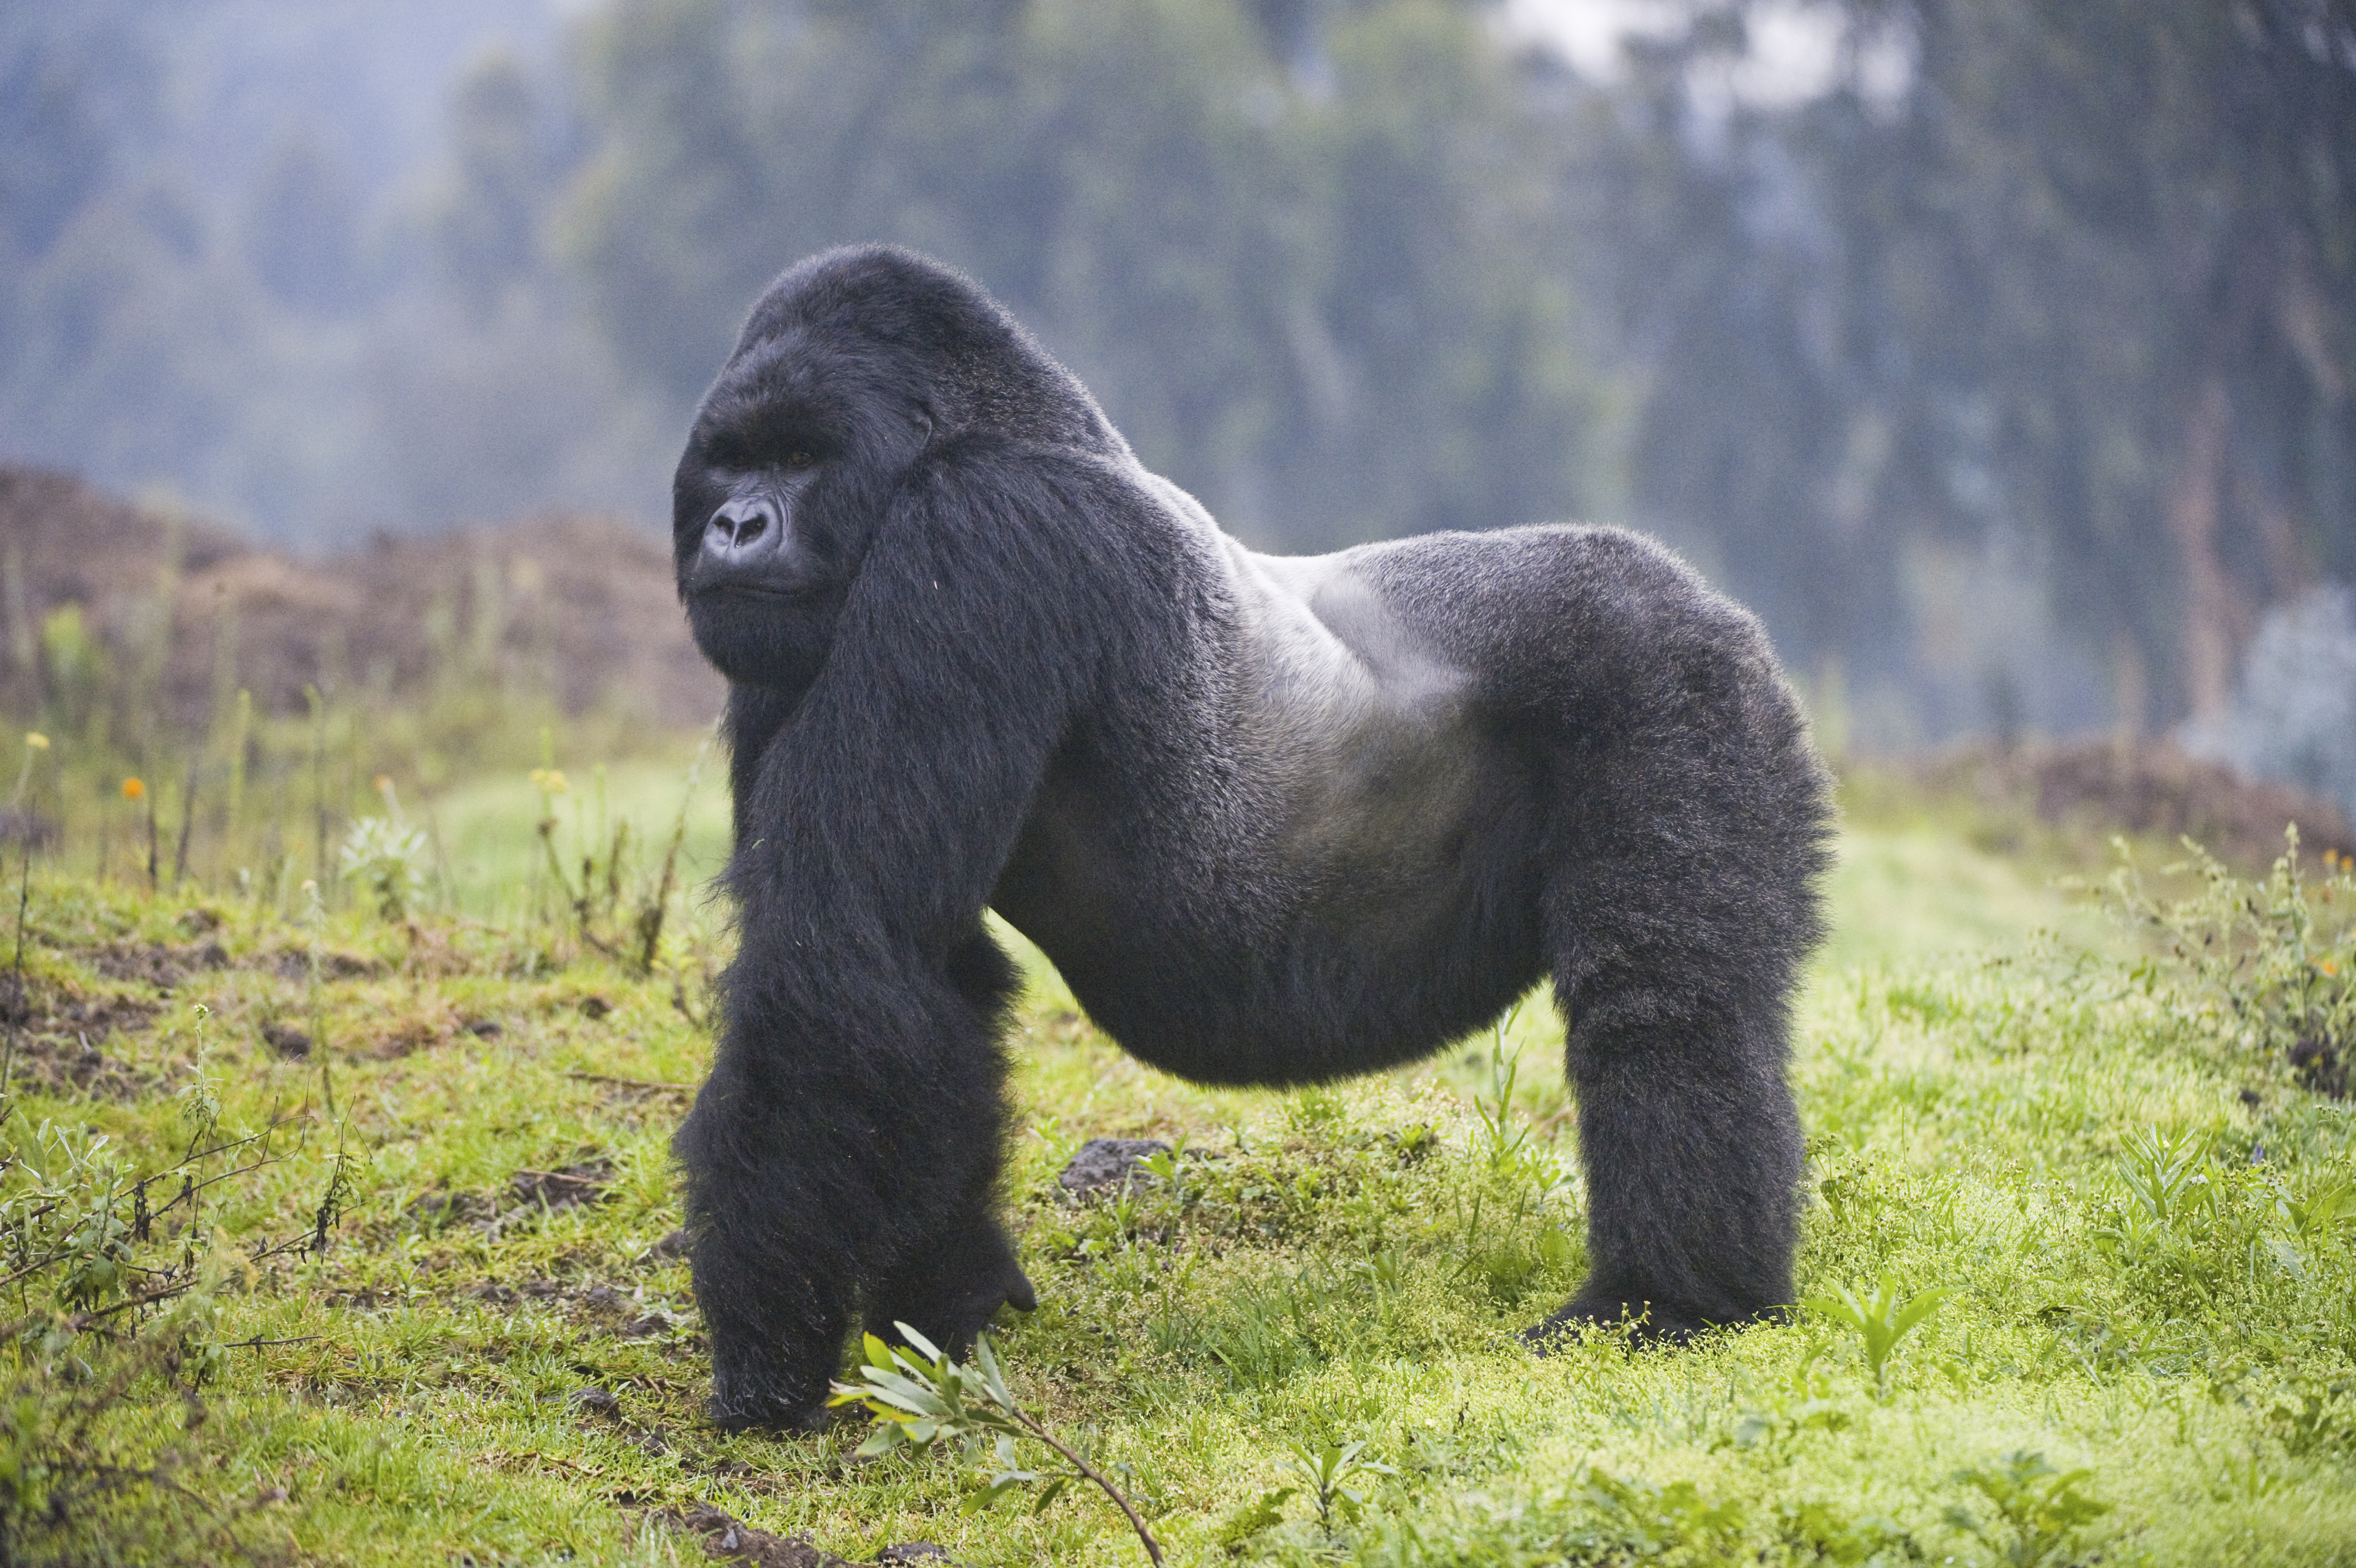 biggest silverback gorilla